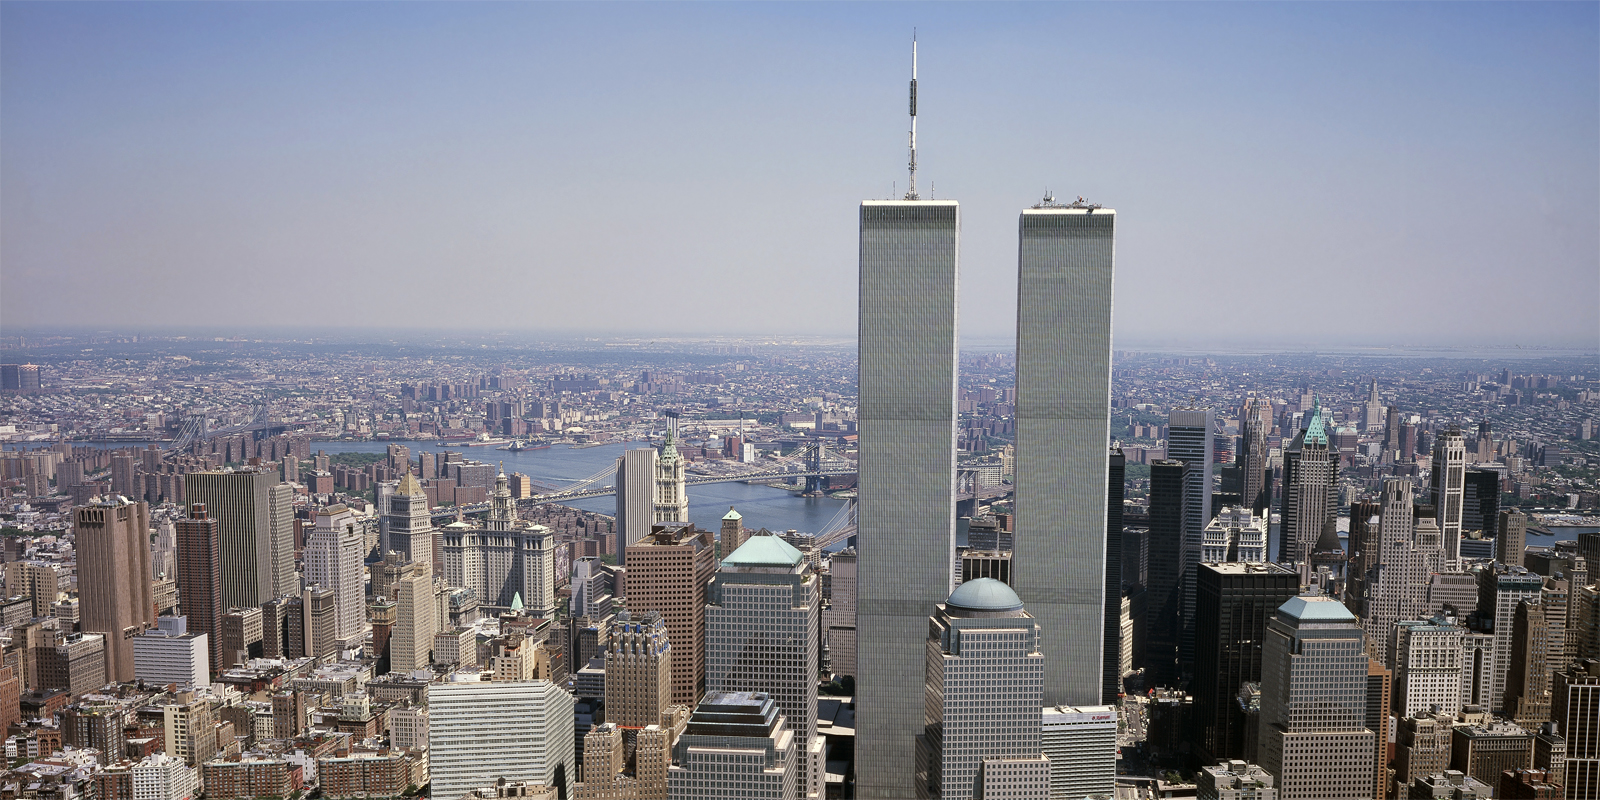 New York City, before September 11, 2001, via Library of Congress.